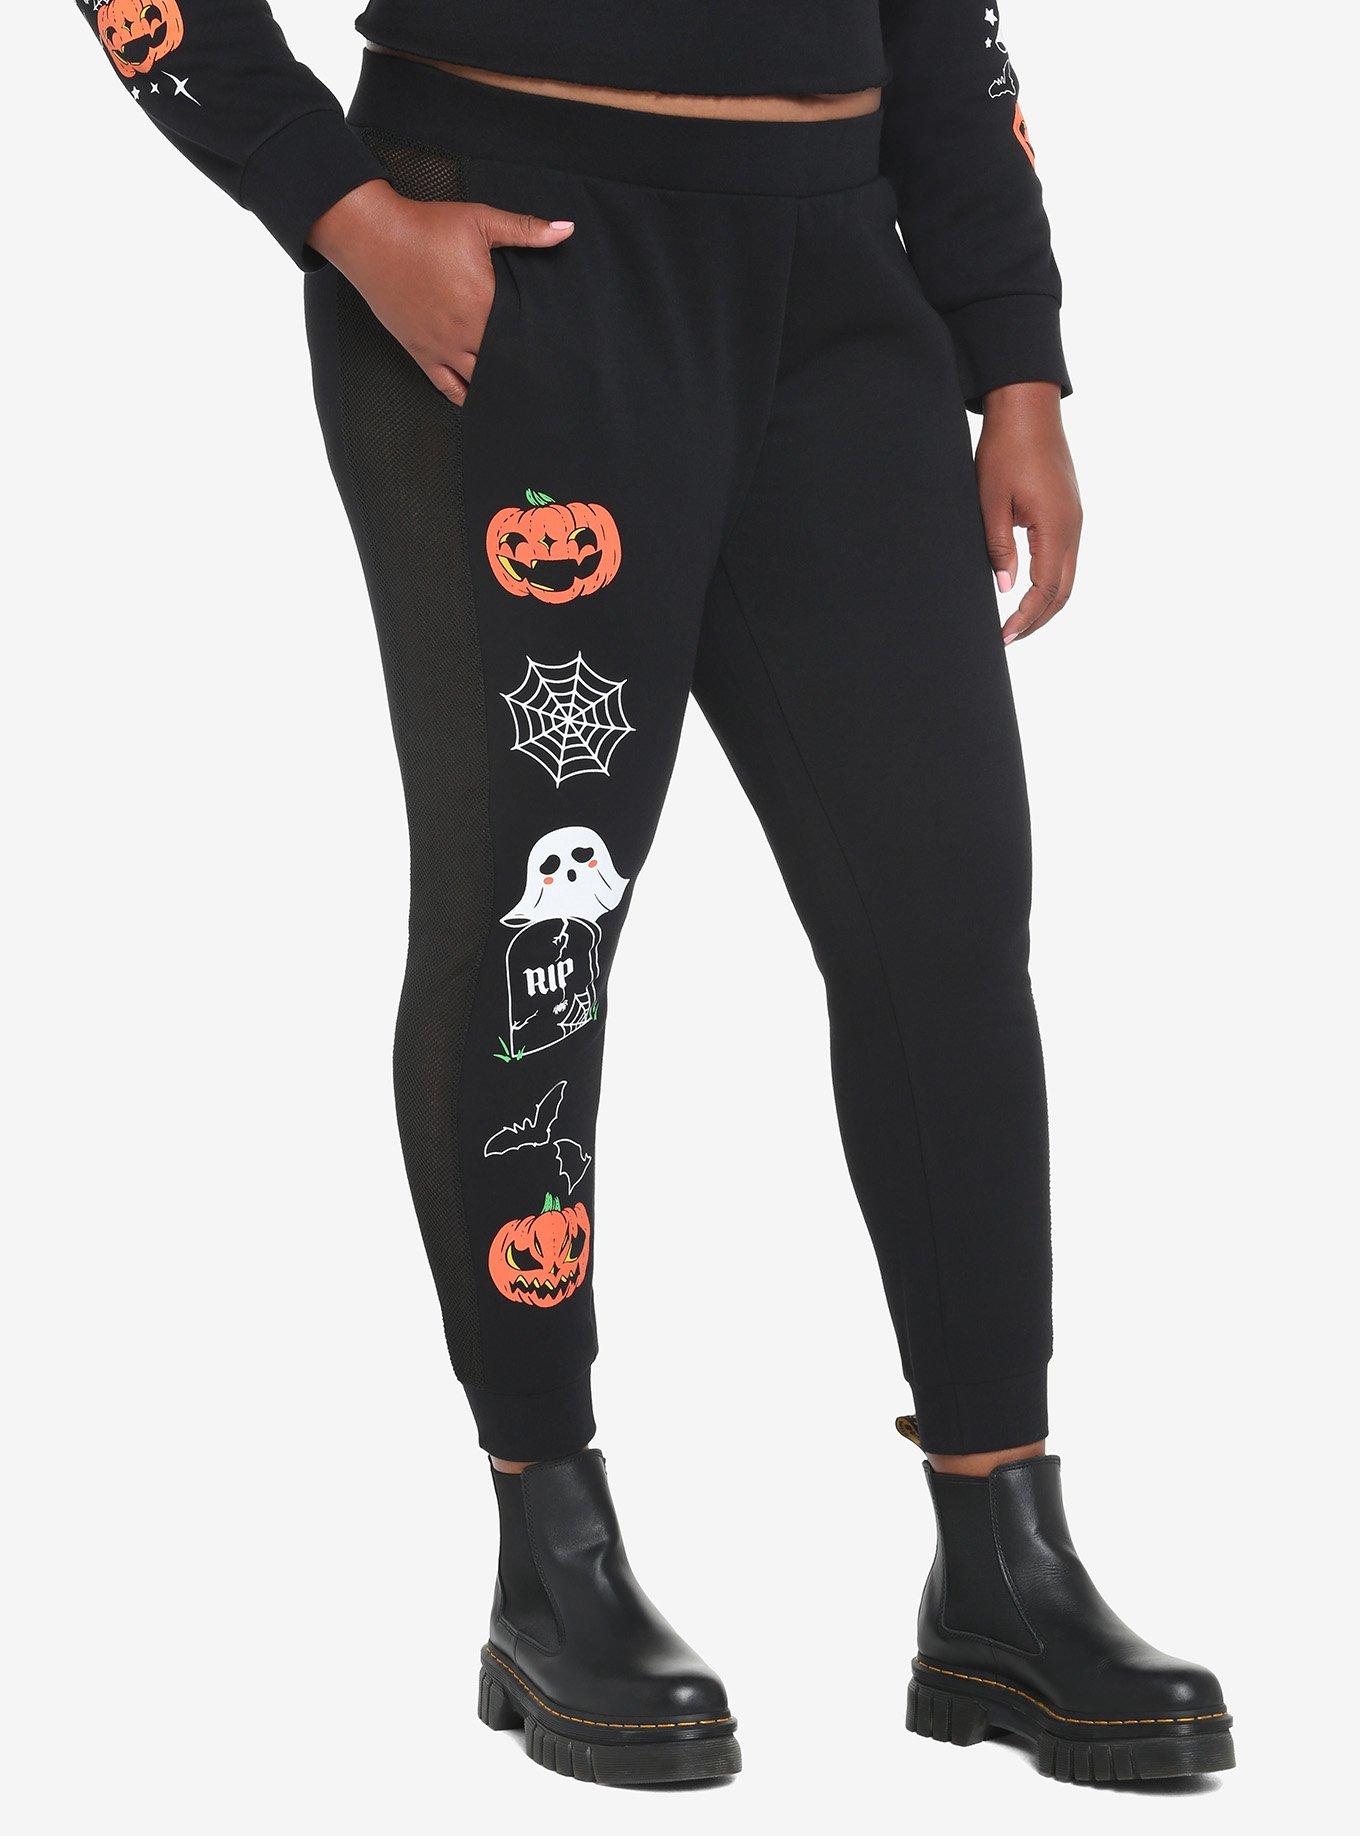 Halloween Icons Mesh Girls Pants Plus Size